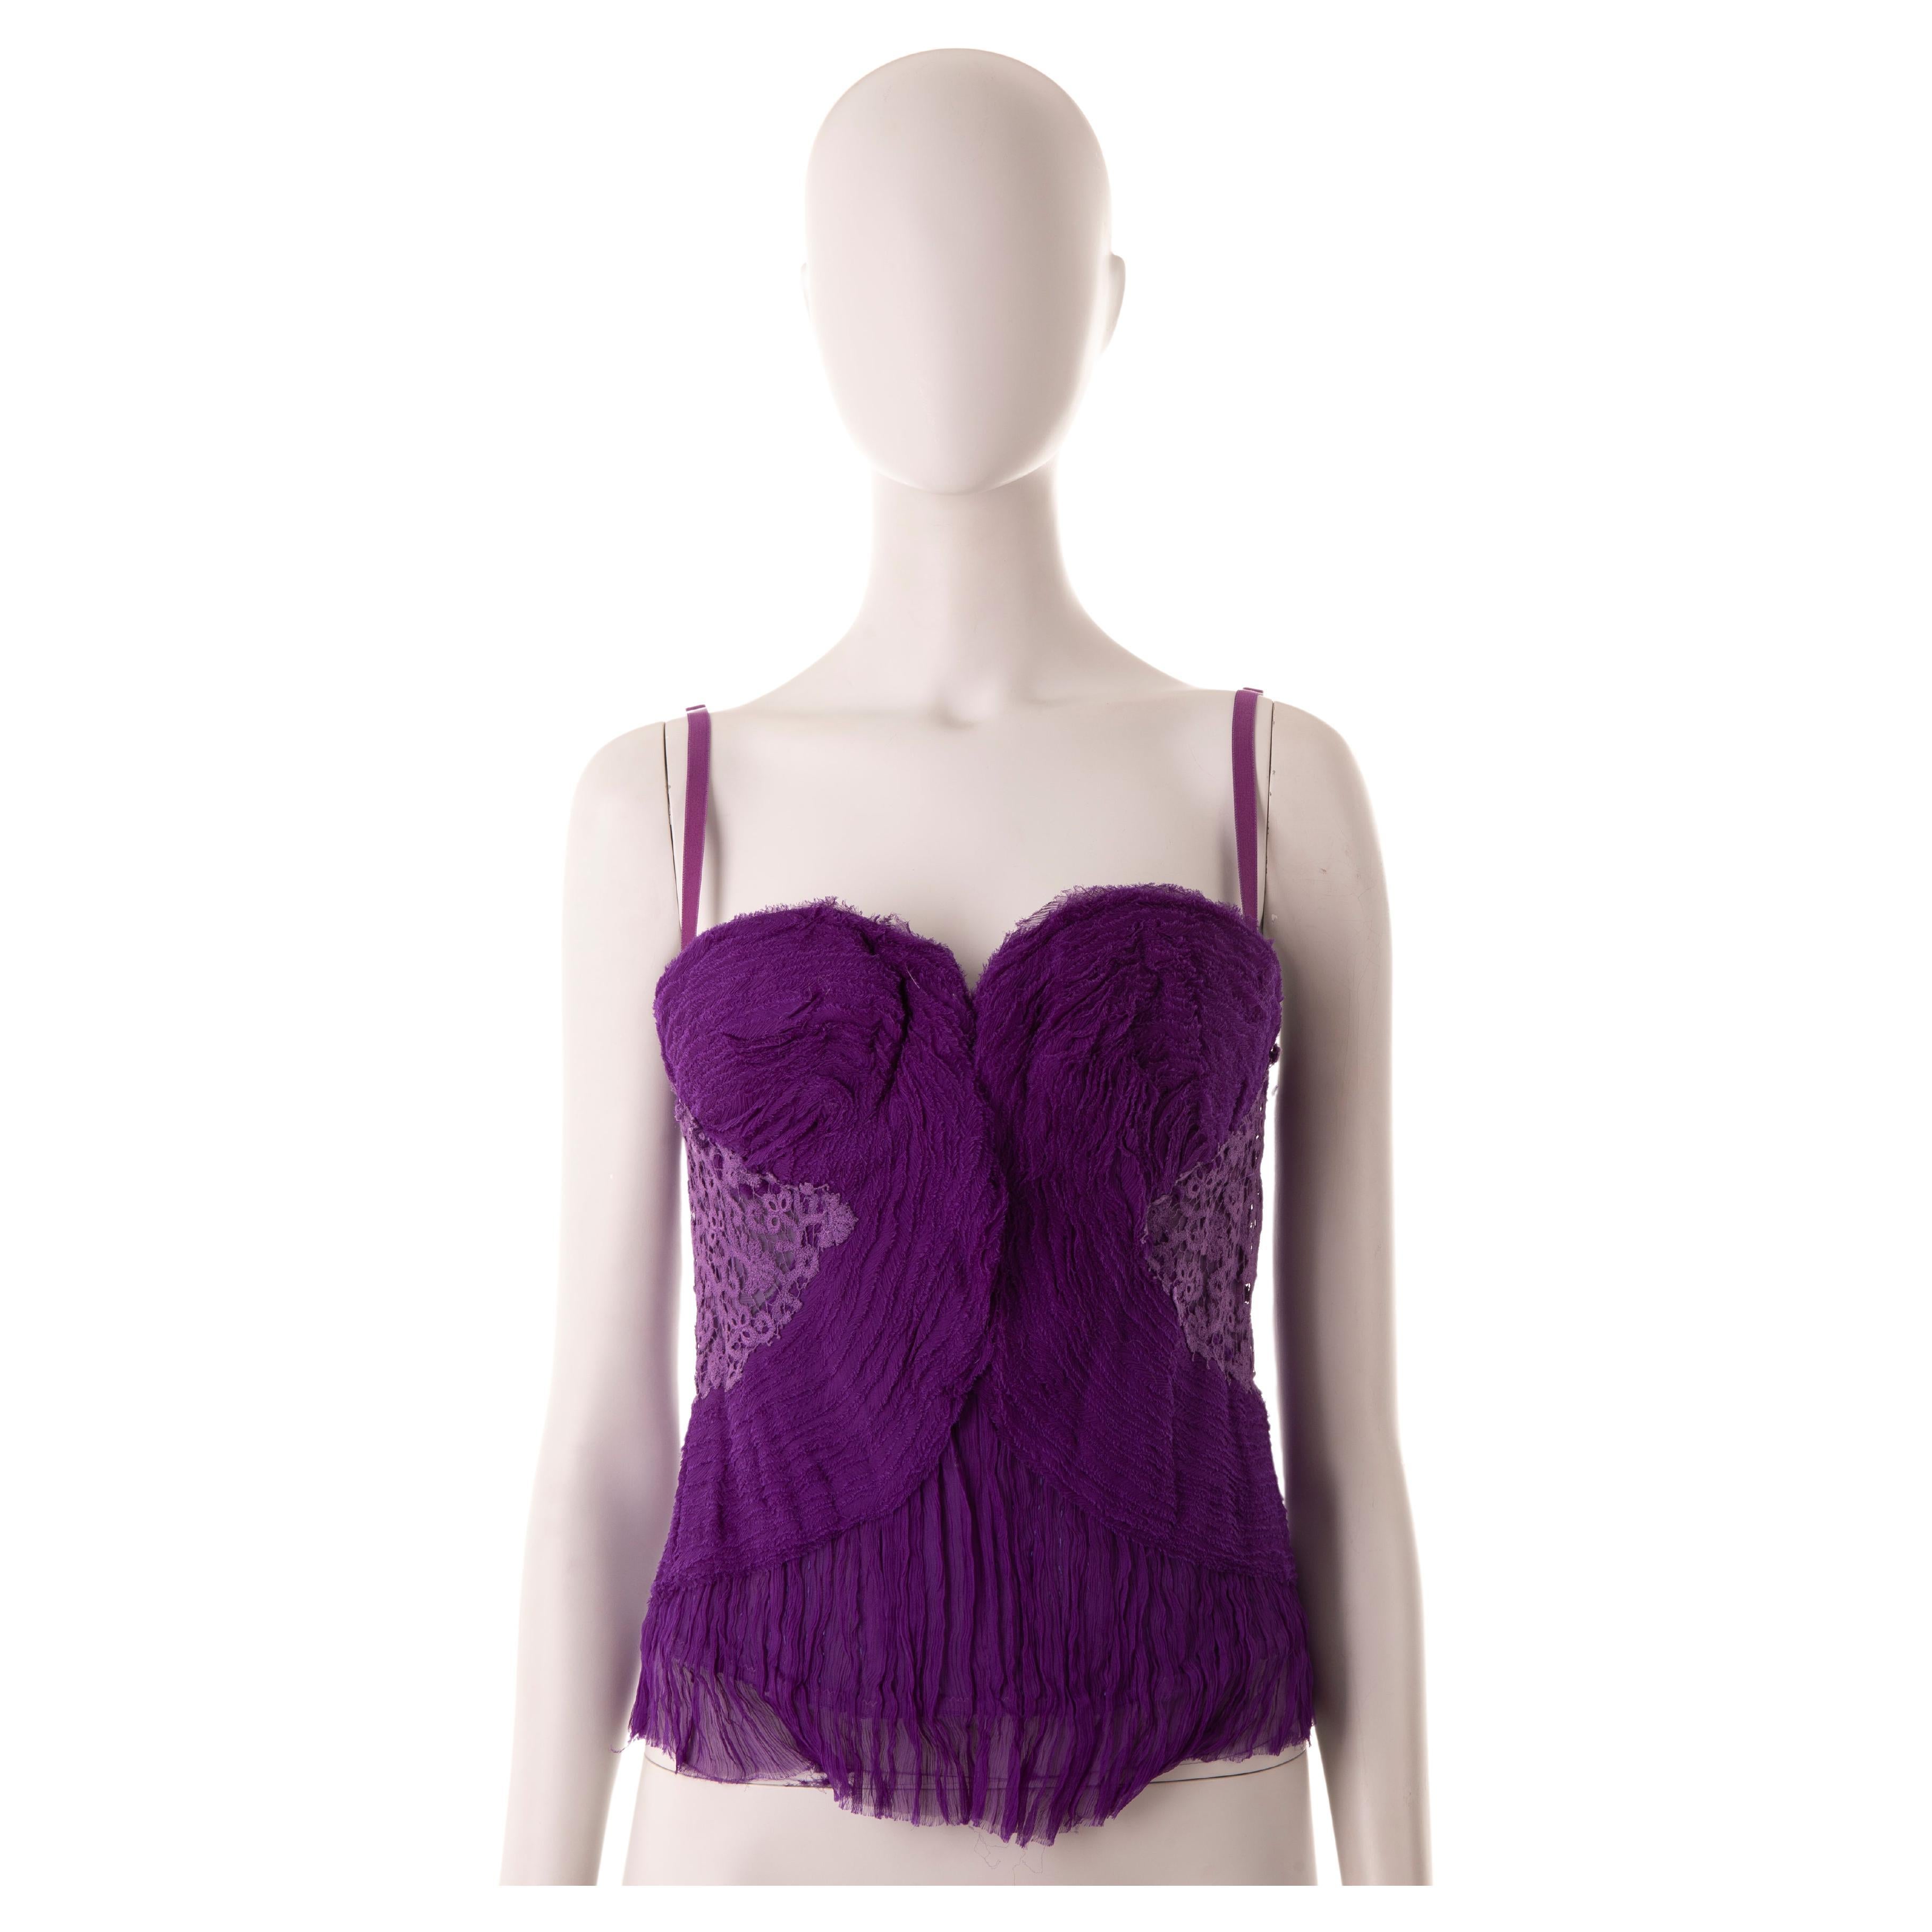 - Multi-panel corset
- Purple ruched silk chiffon and lace
- Hooks fastening on the back